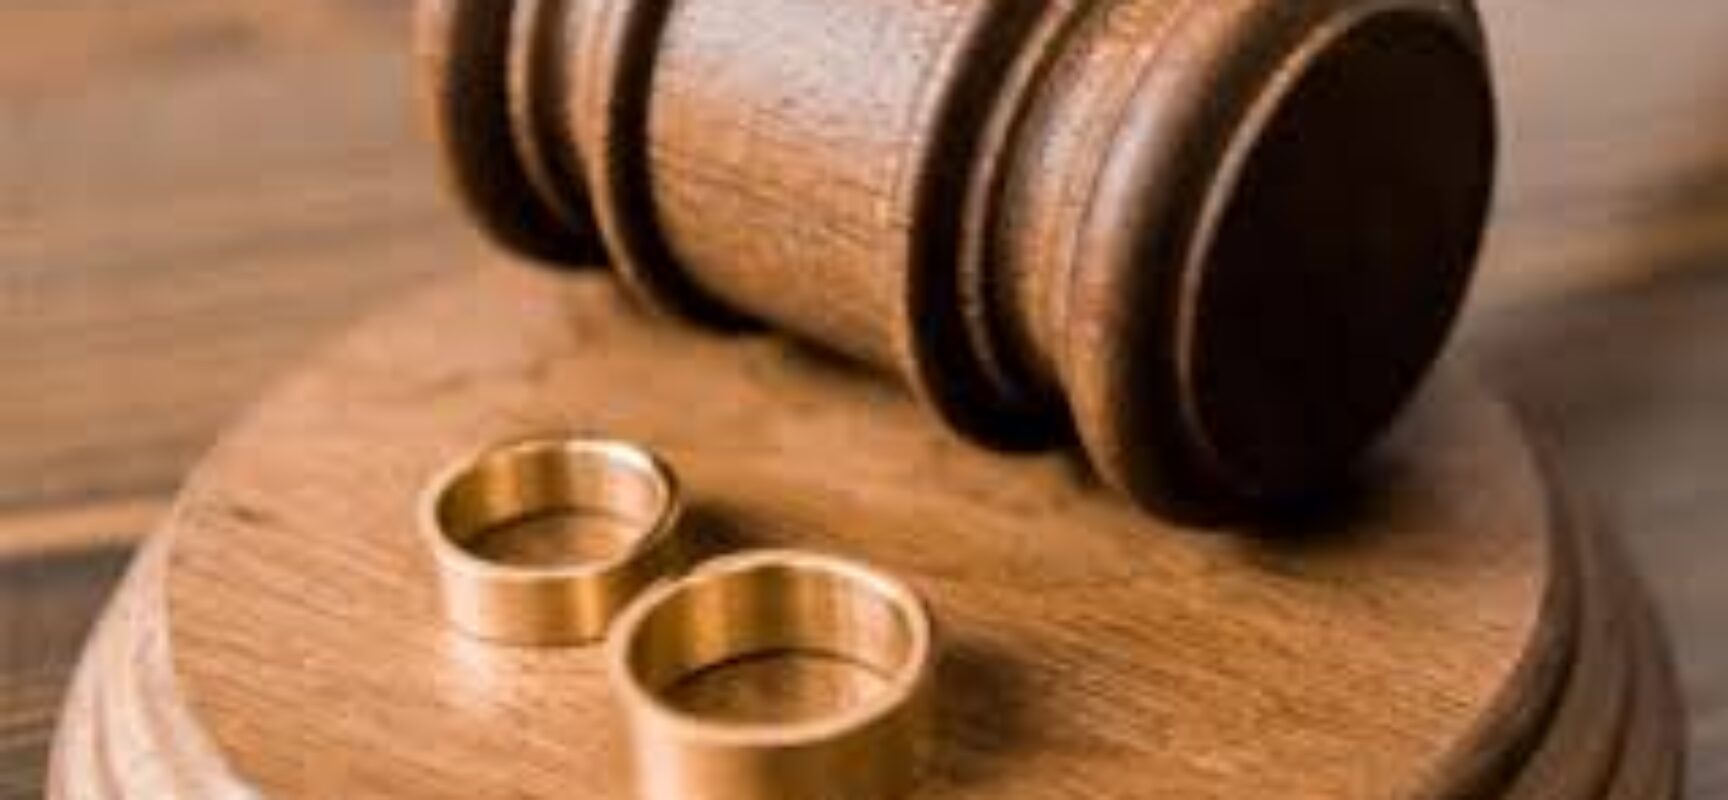 Direito ao imediato divórcio é inegável